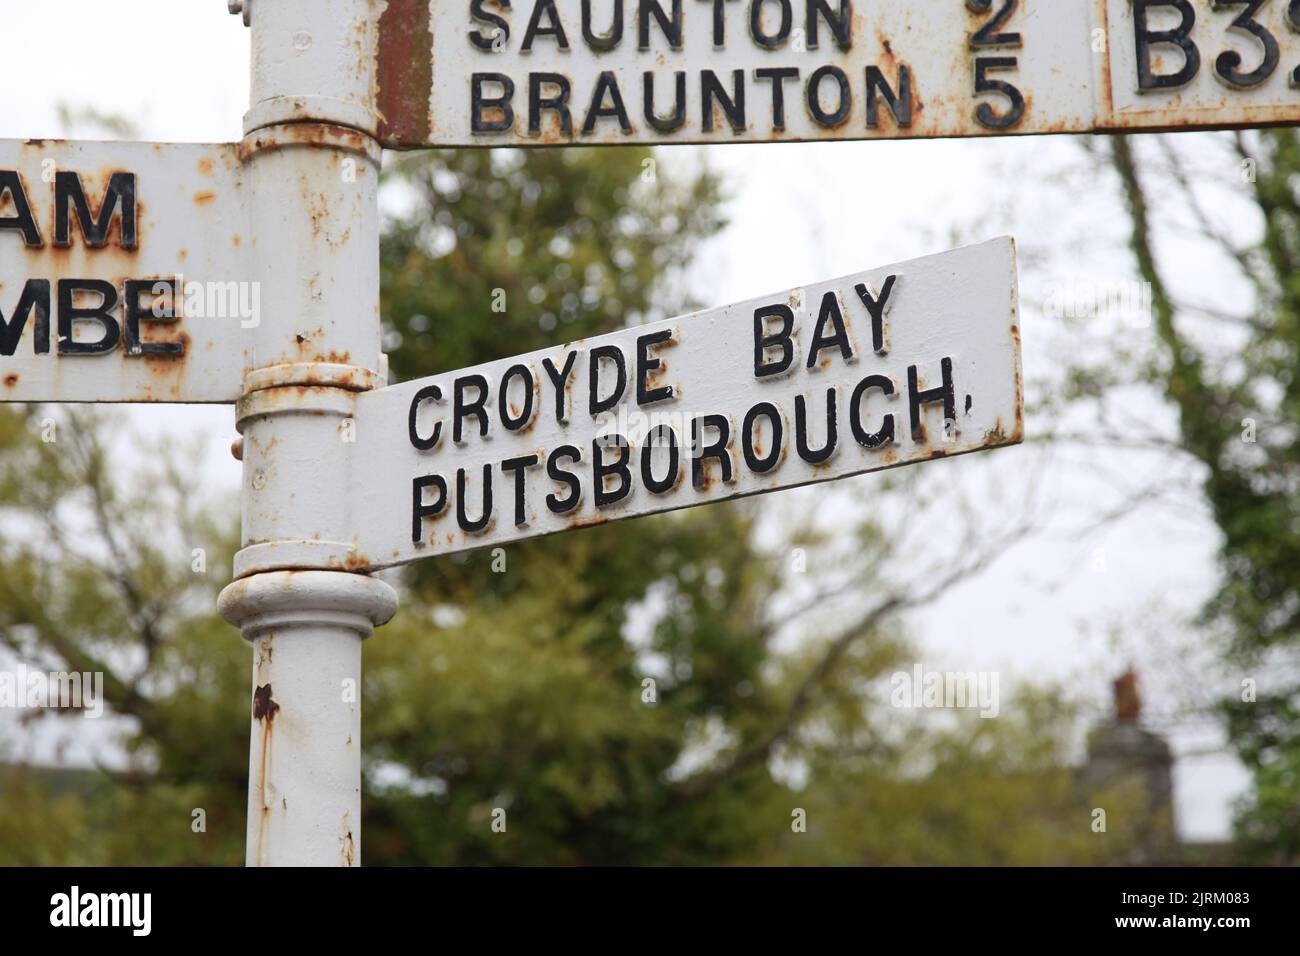 Old iron sign post for Croyde Bay and Putsborough, Croyde village, Braunton, North Devon, England, UK, August 2022 Stock Photo